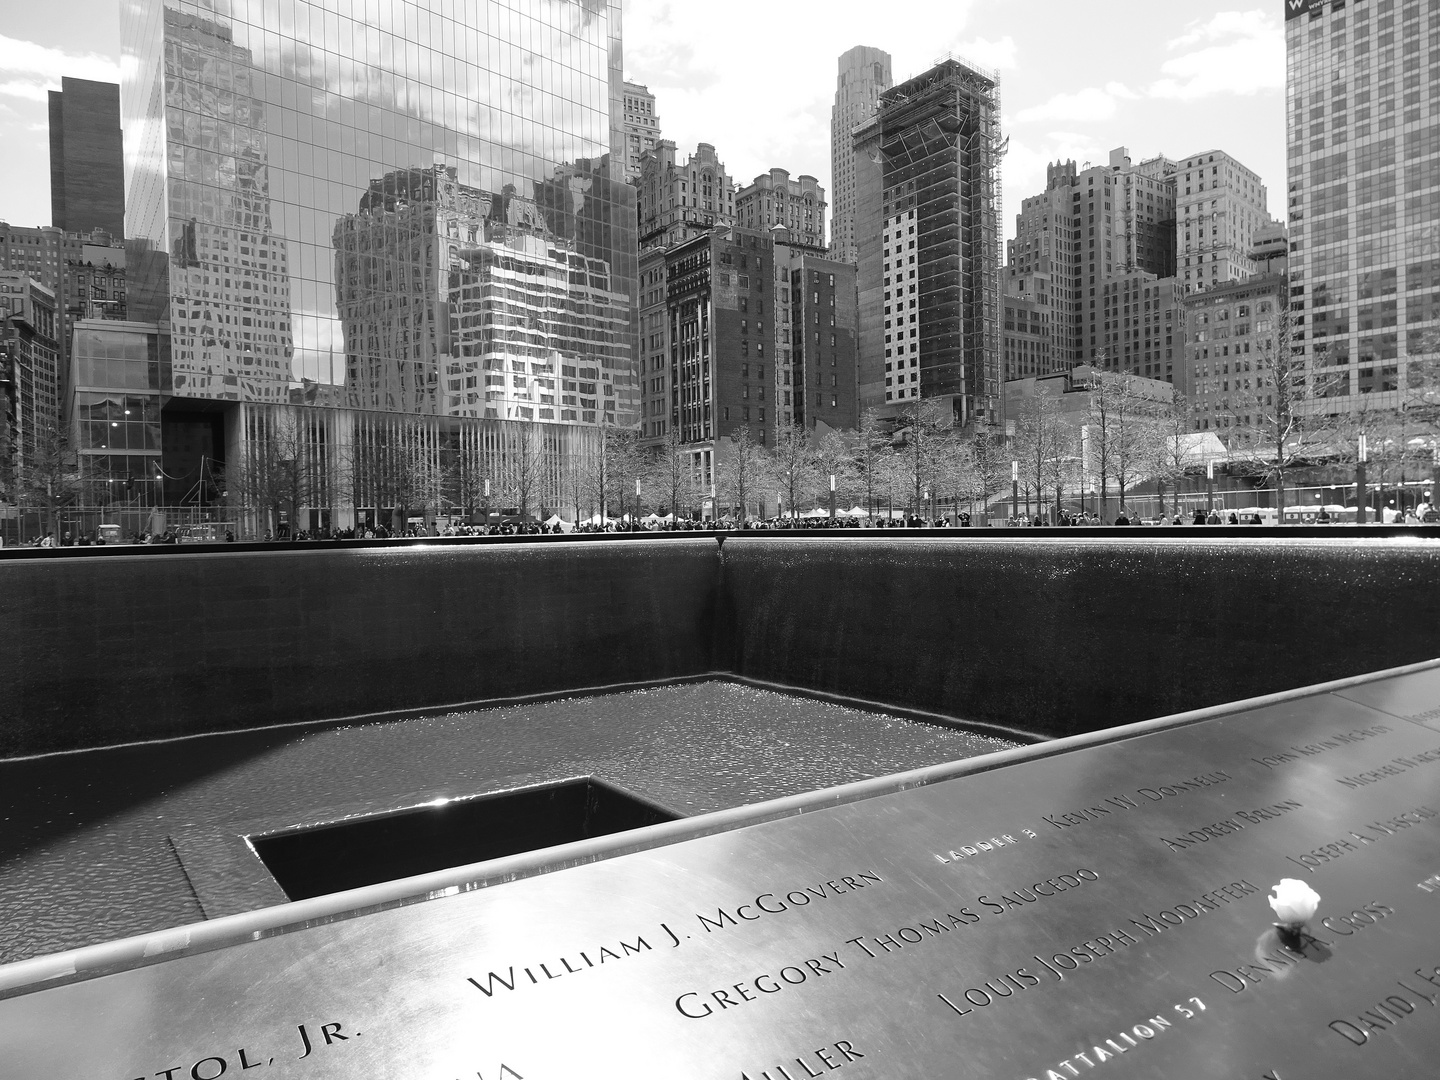 NEW YORK, NEW YORK - 9/11 Memorial